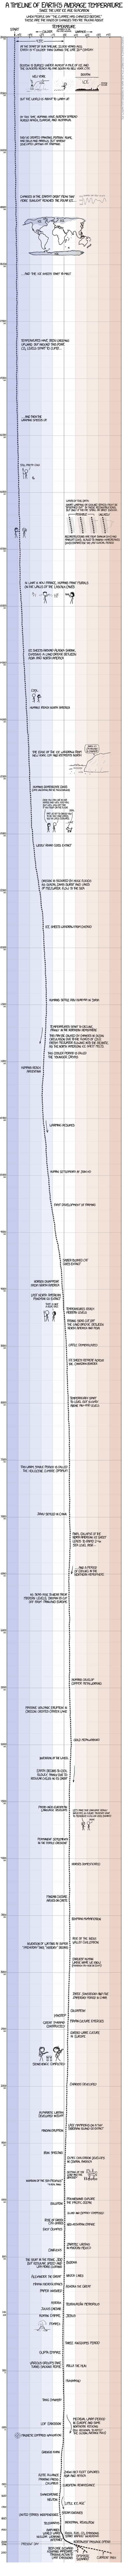 earth temperature timeline